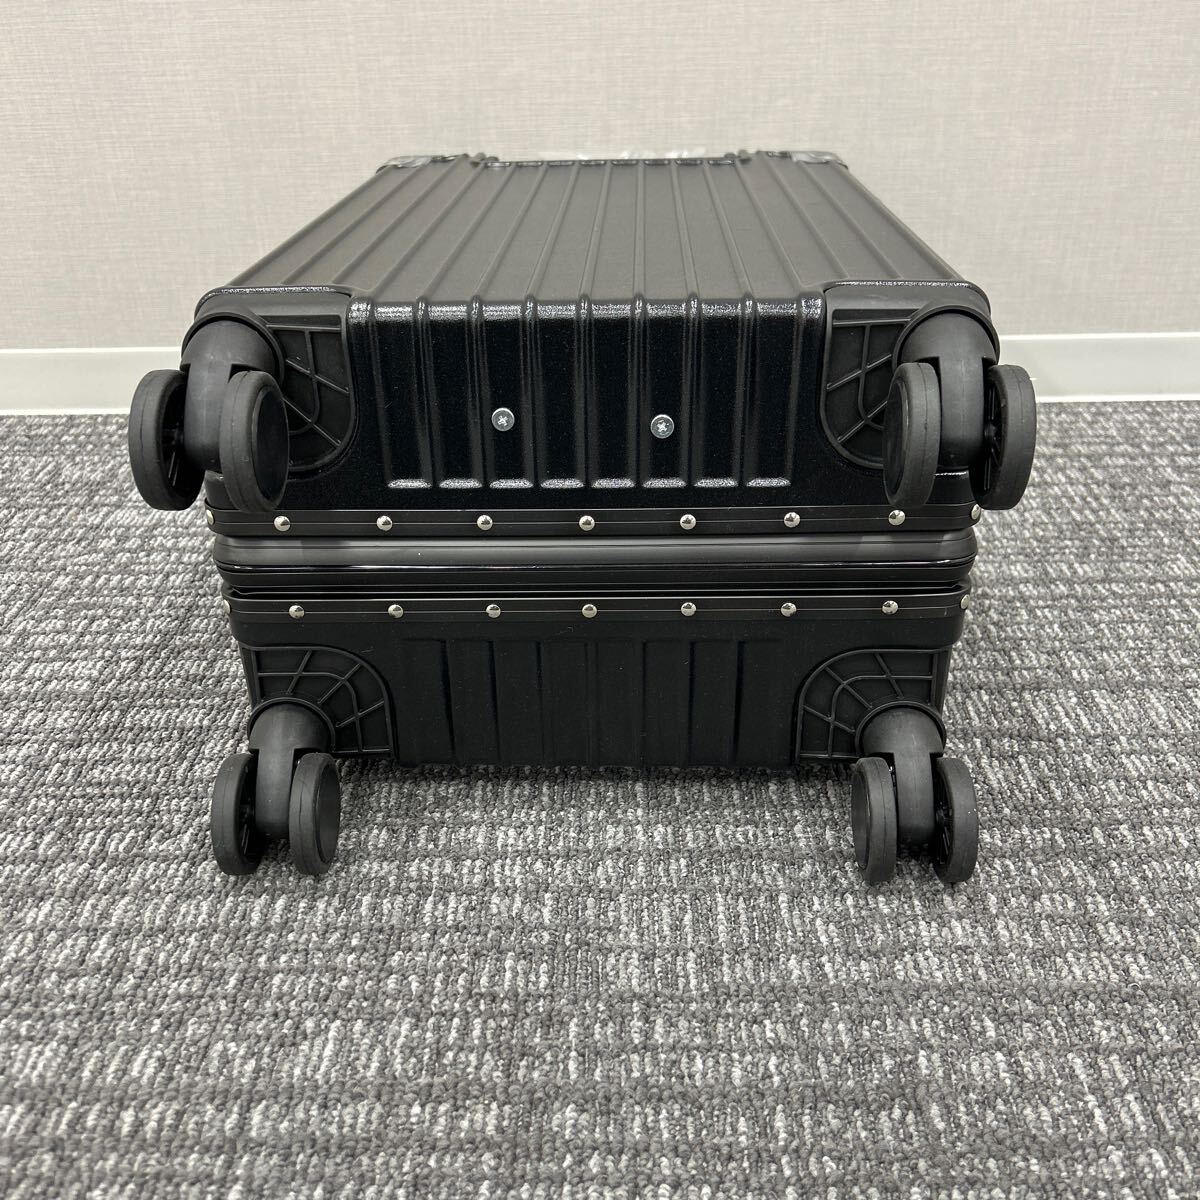  Carry case suitcase machine inside bringing in 40L carry bag black 